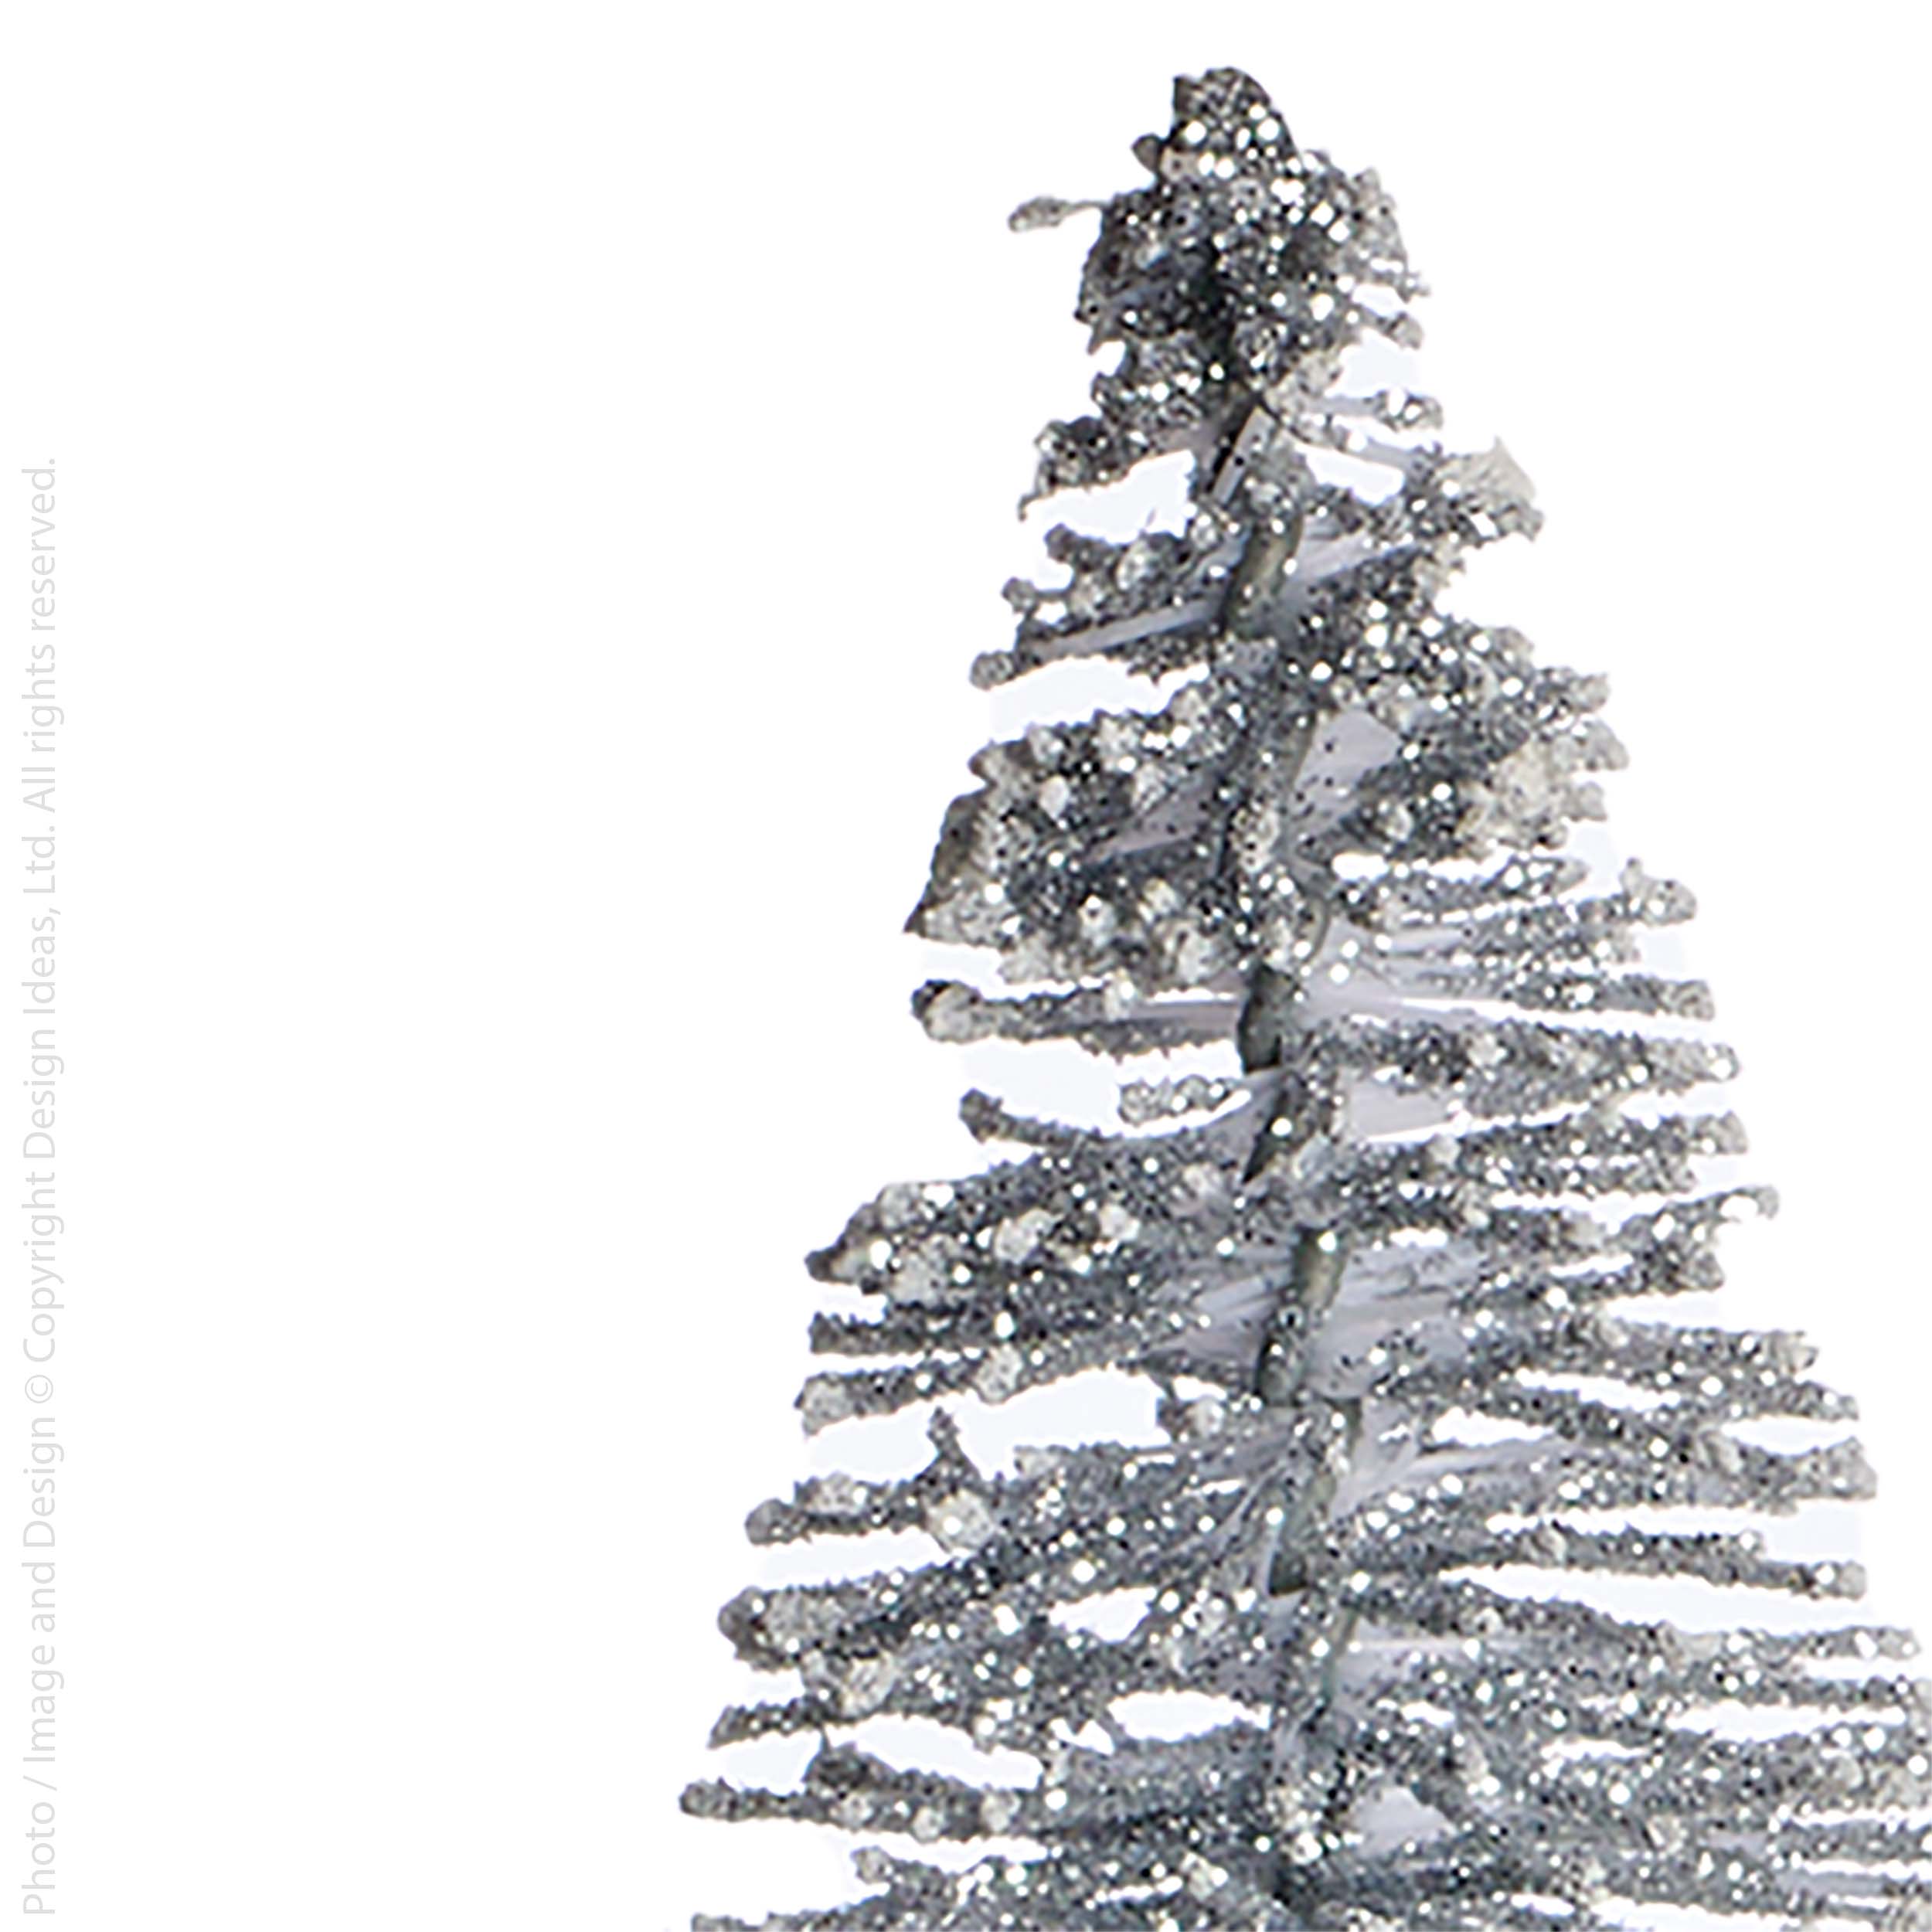 Yukon™ Bottle Brush Silver Trees with Snow (Set of 12)